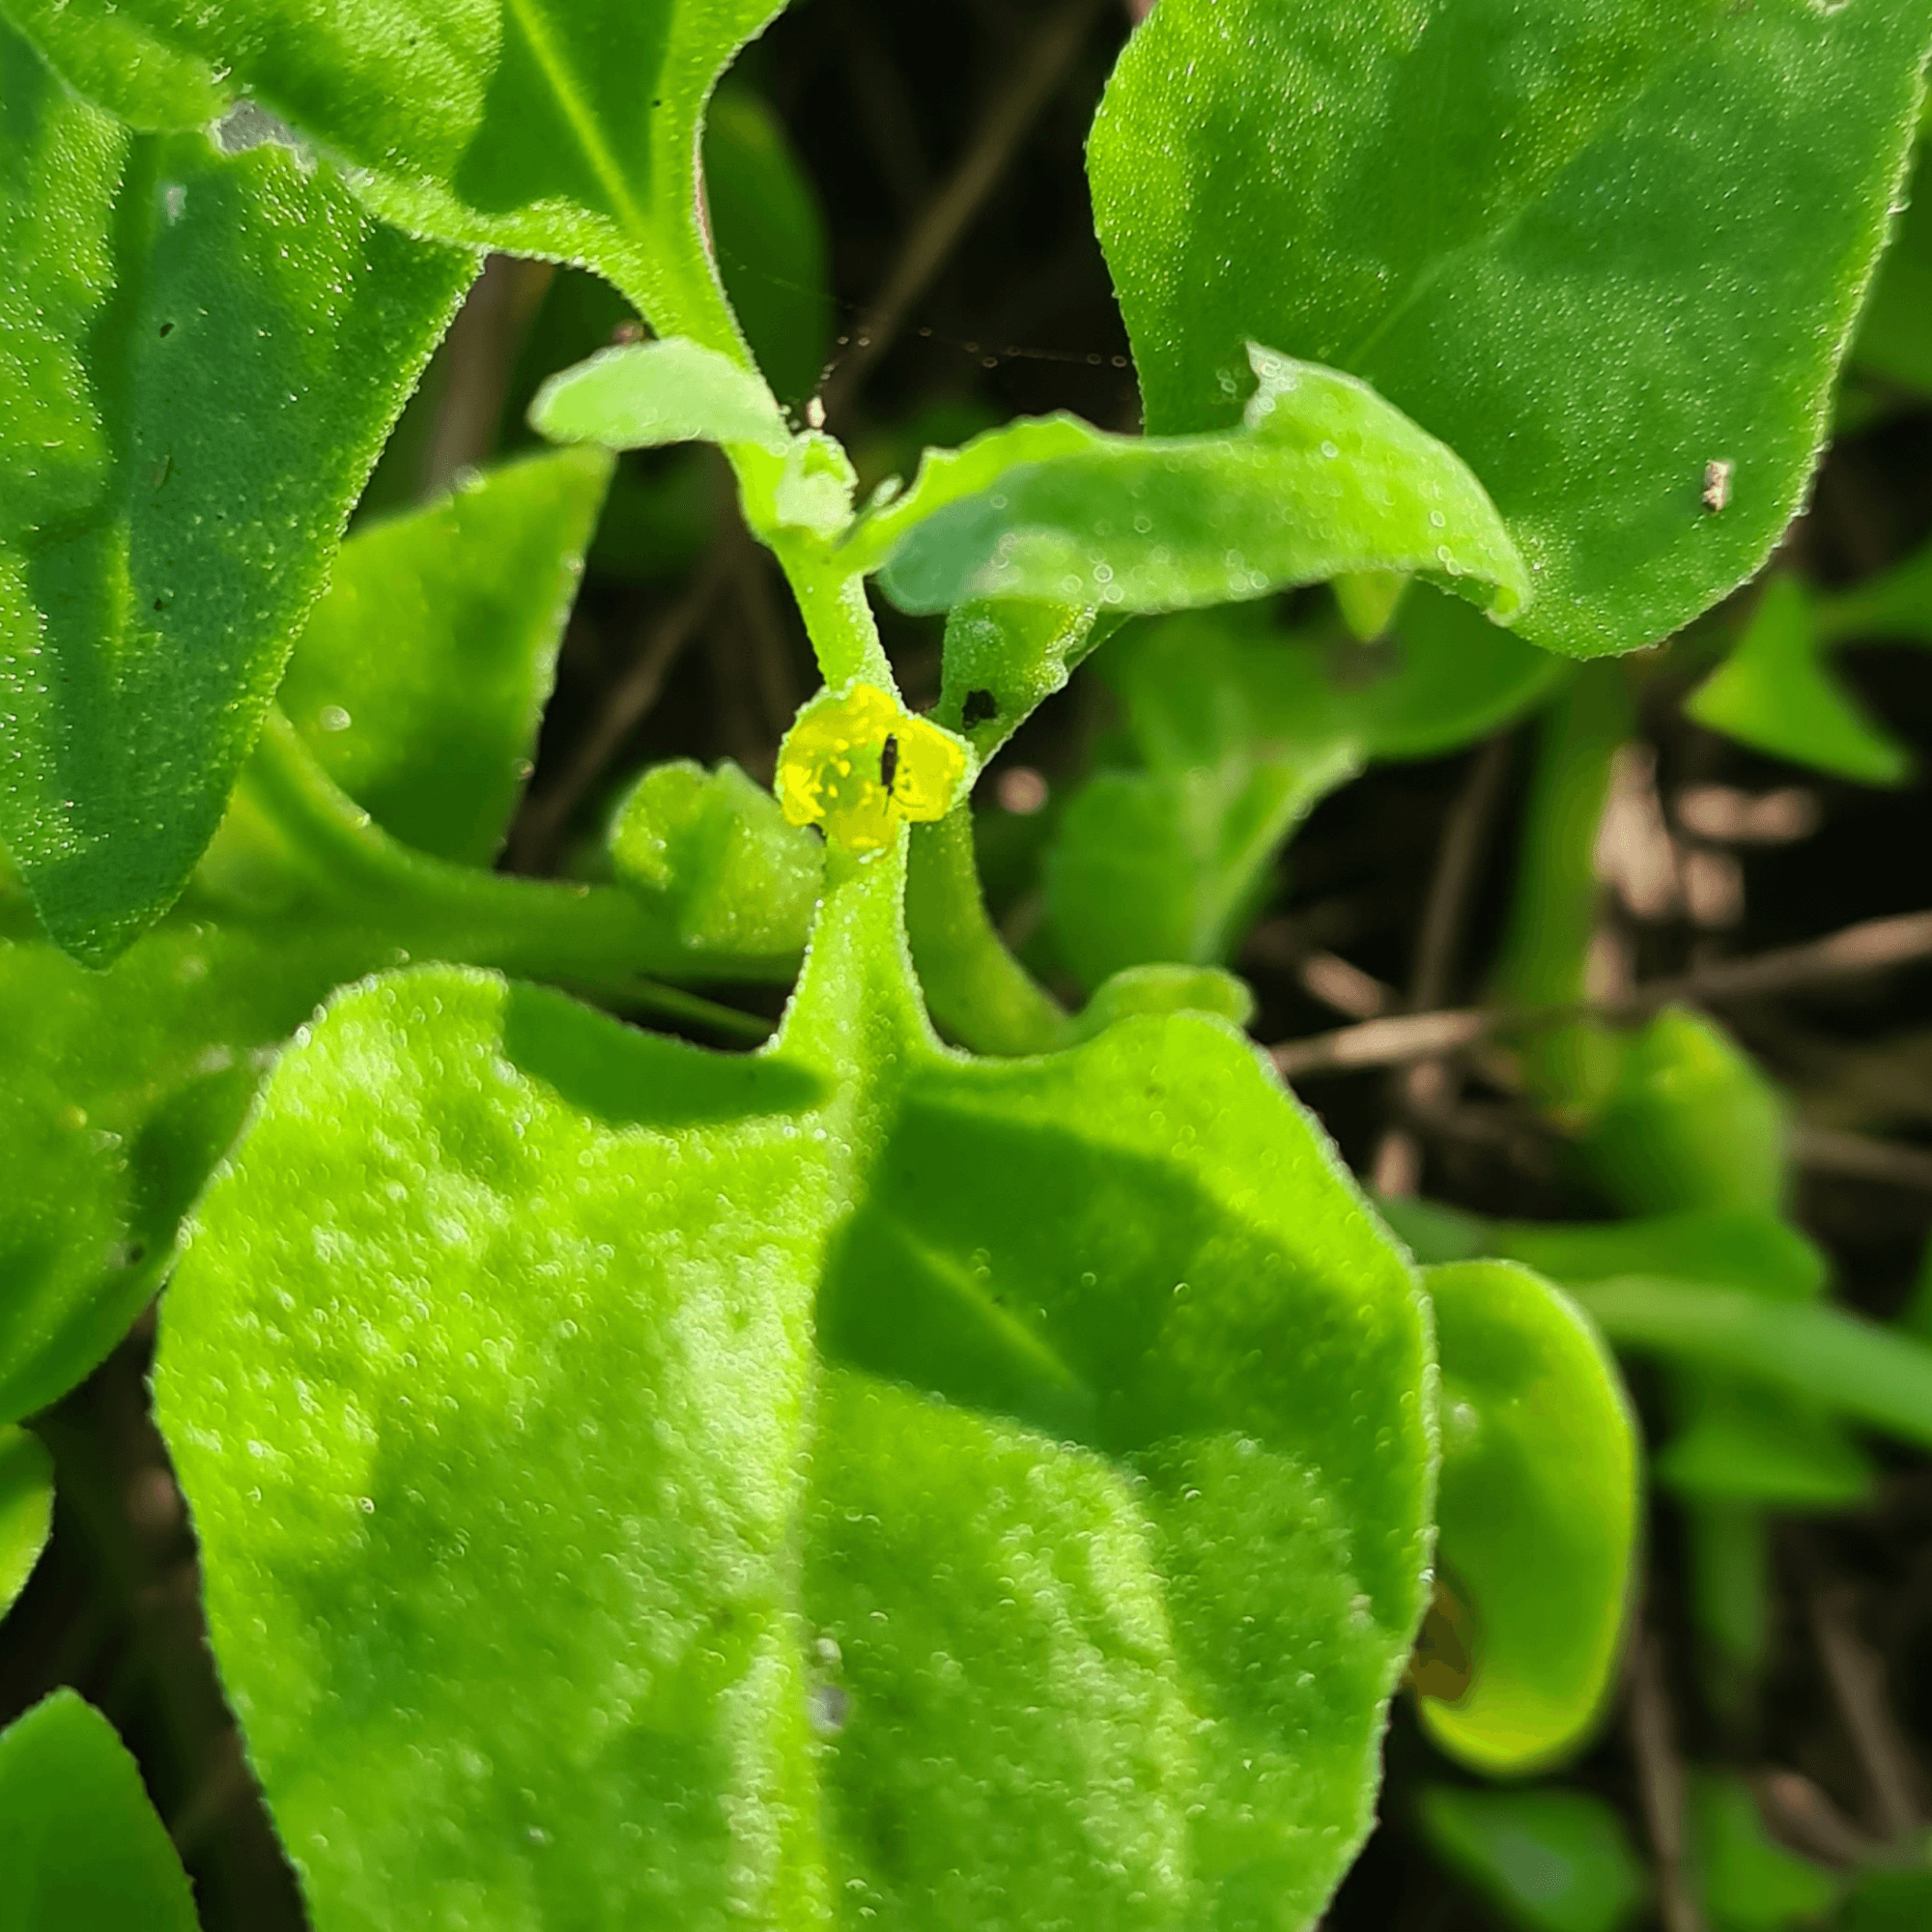 Warringal Green - New Zealand Spinach. Bush Tucker - Rare Dragon Fruit